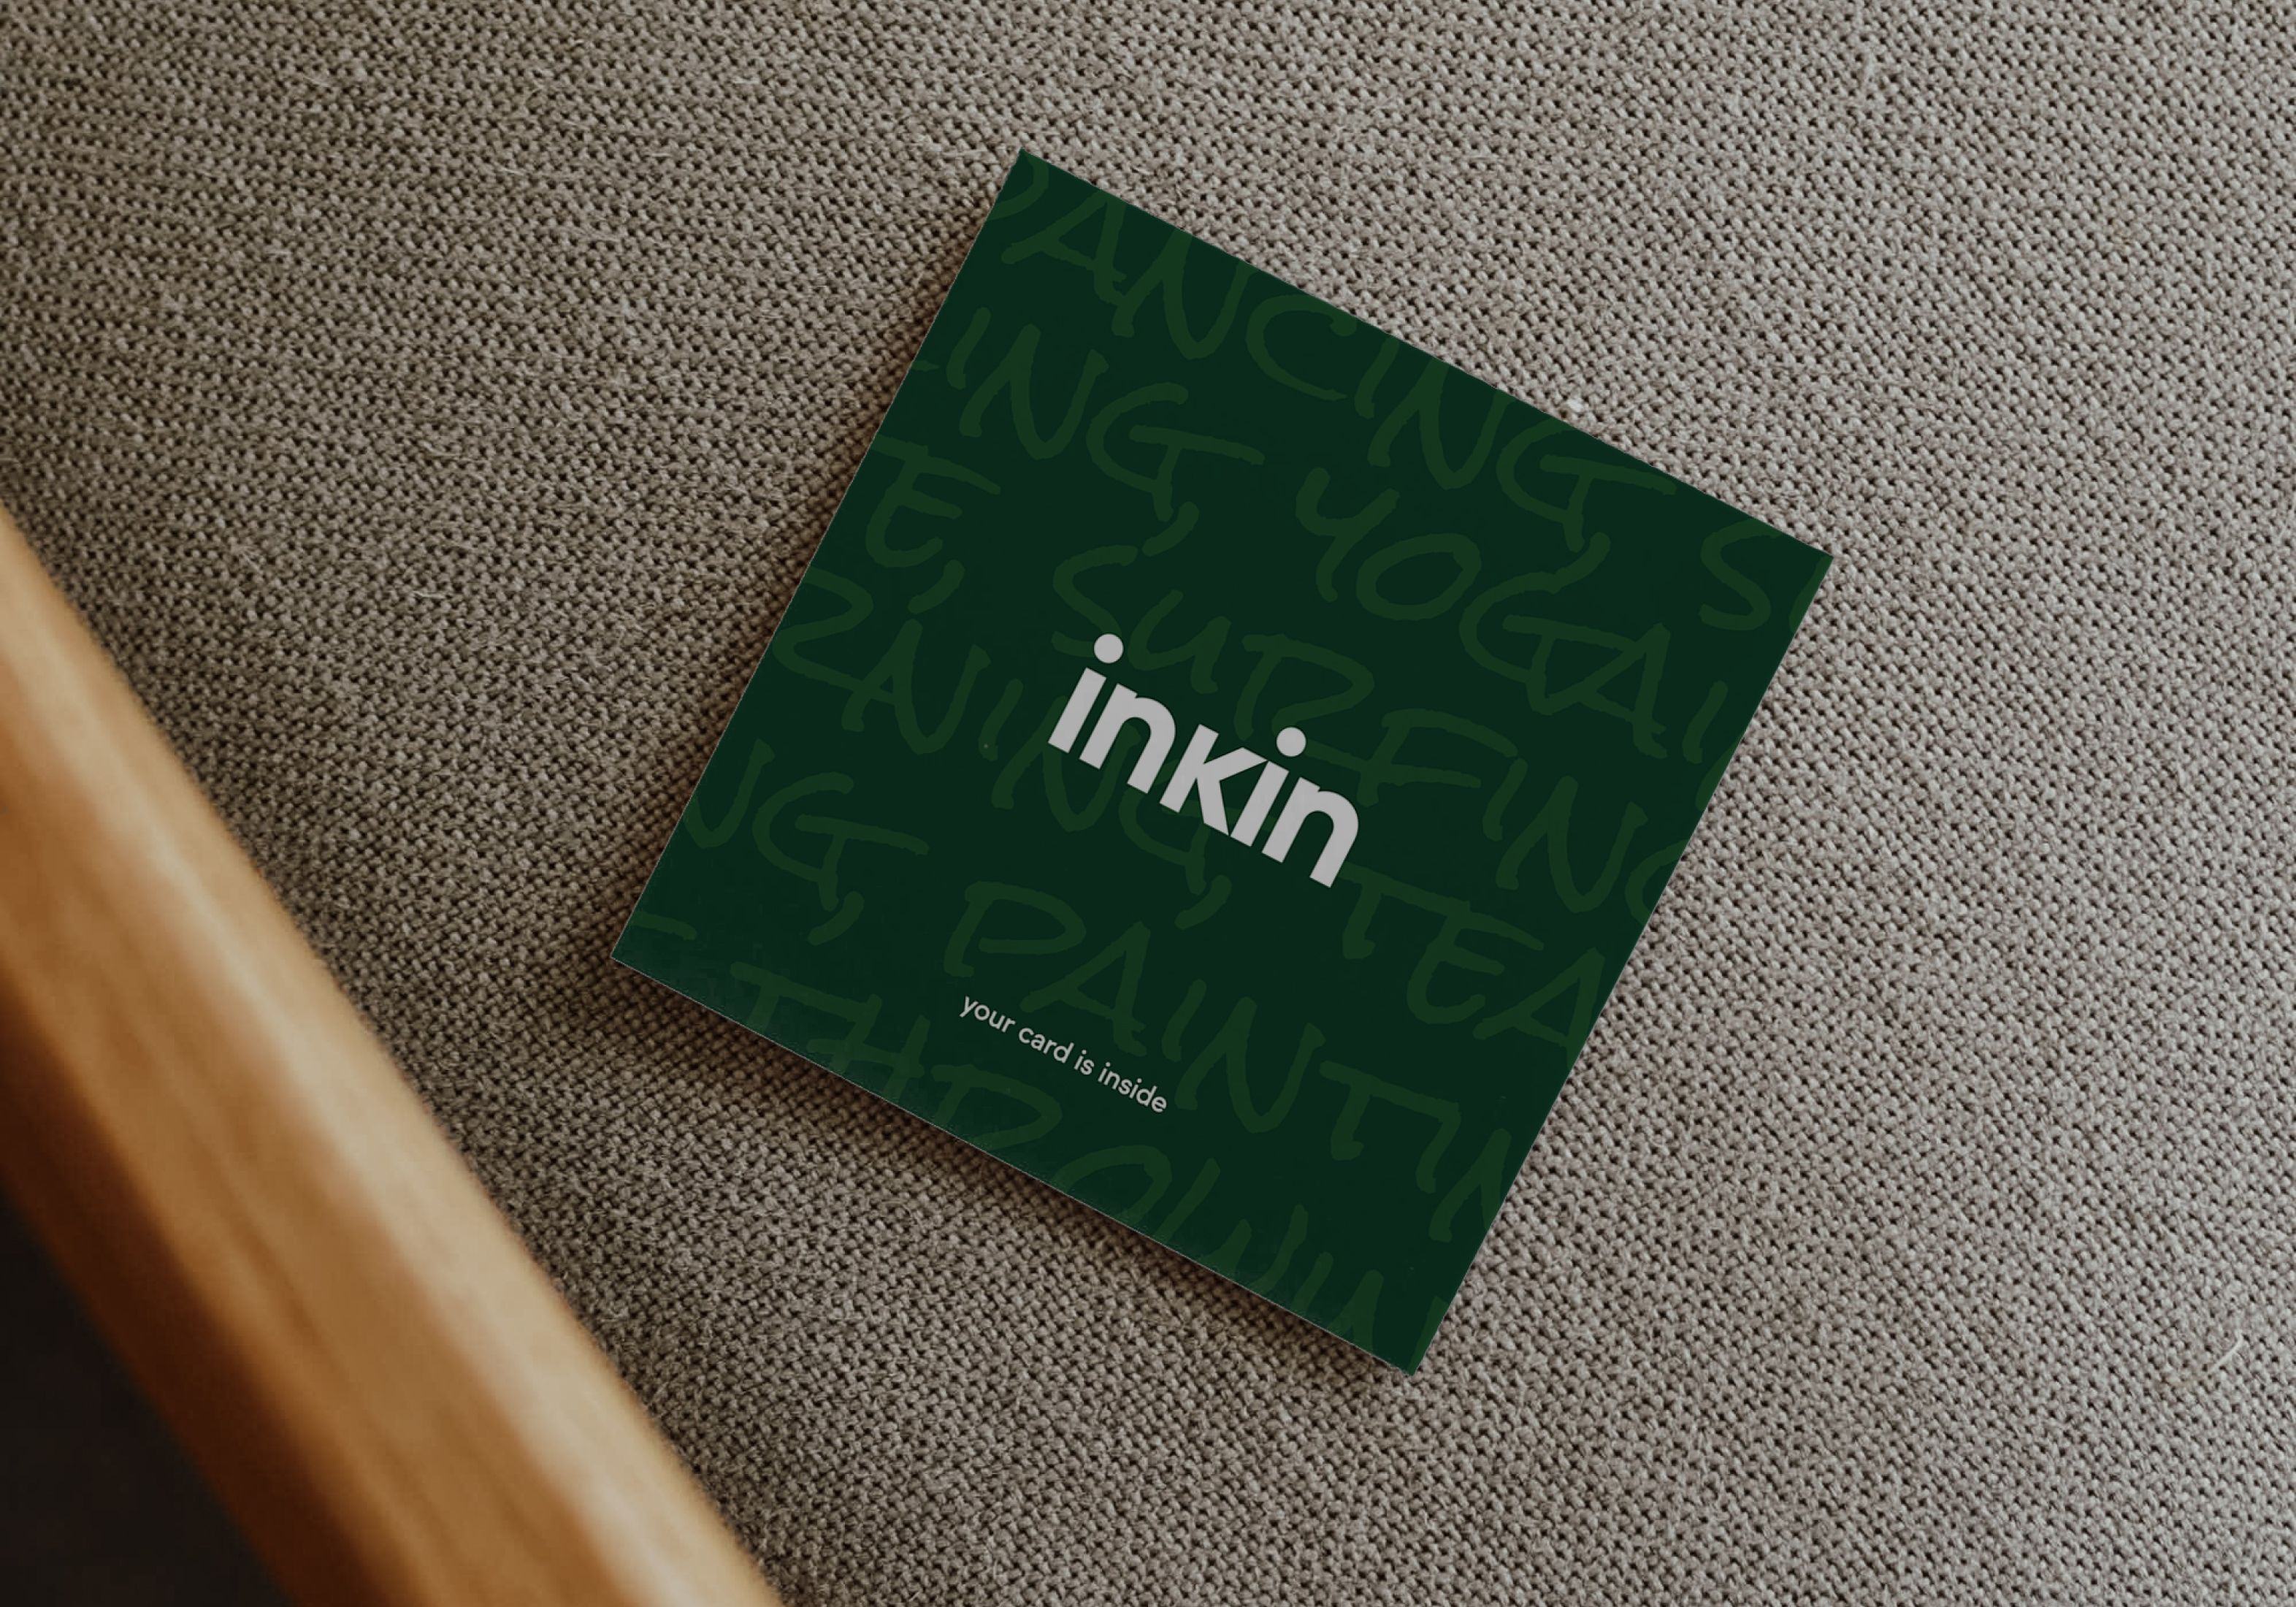 Inkin wellnes platform branding